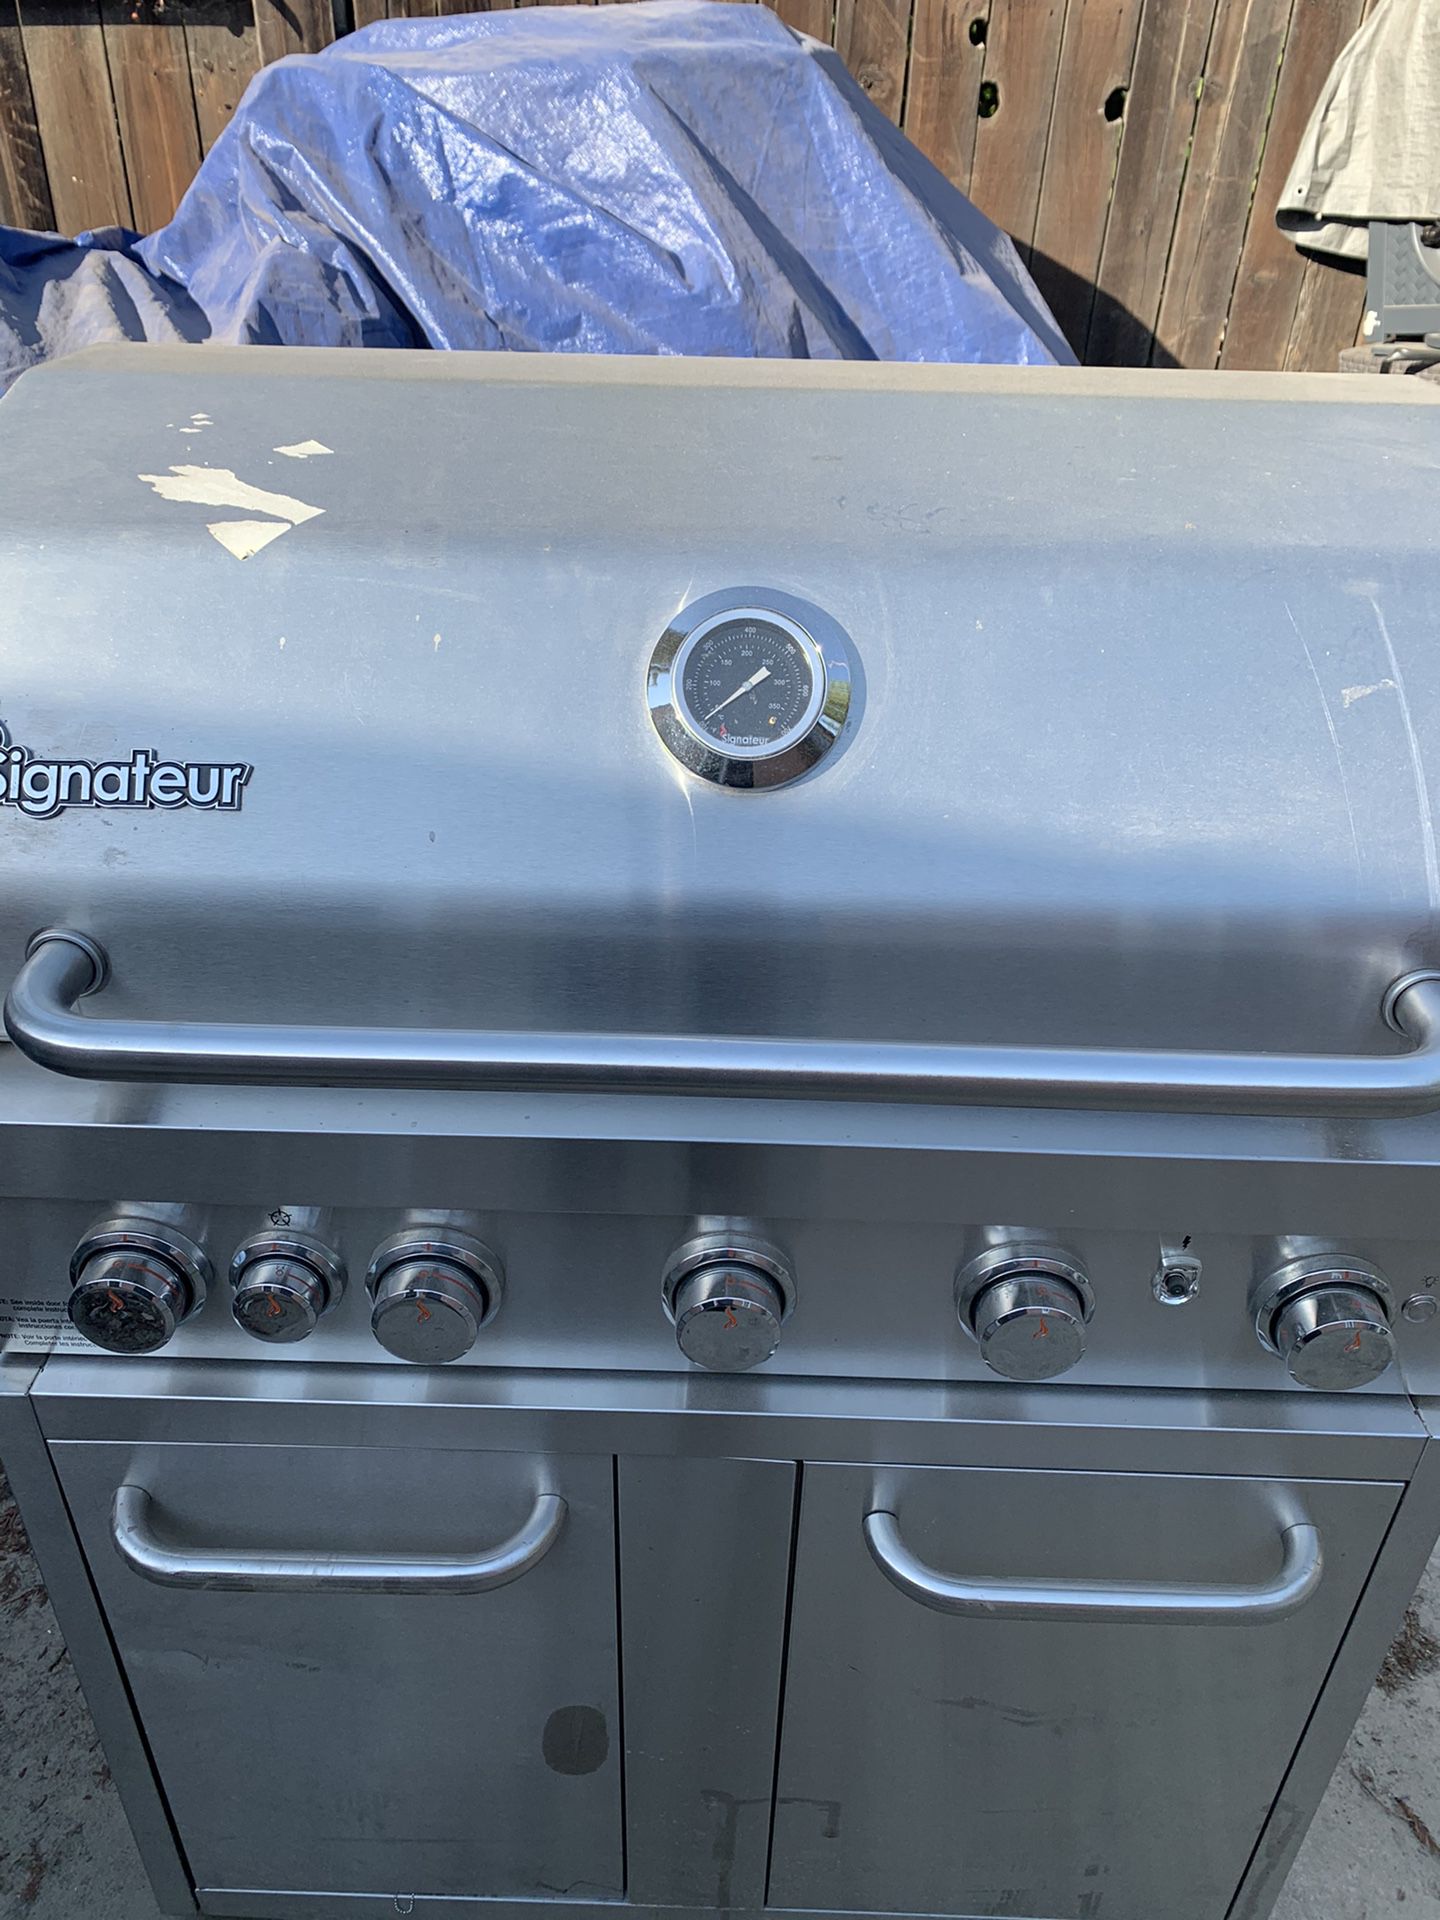 Used signateur bbq grill